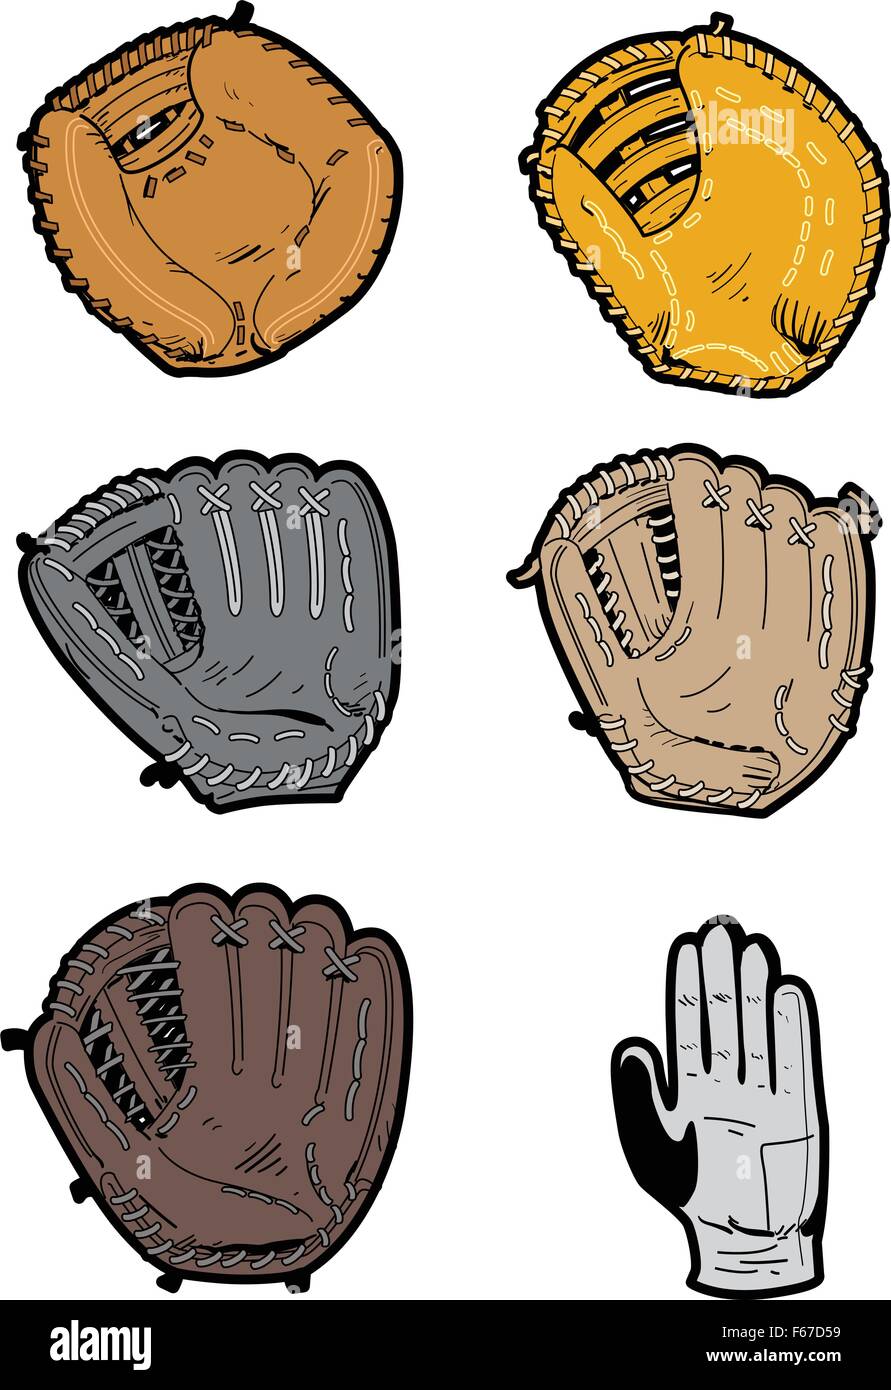 Sechs verschiedene professionelle Baseball Handschuh Arten: Schalter Werfer Handschuh, Outfielder der Handschuh, Pitcher den Handschuh, Infielder den Handschuh, Stock Vektor